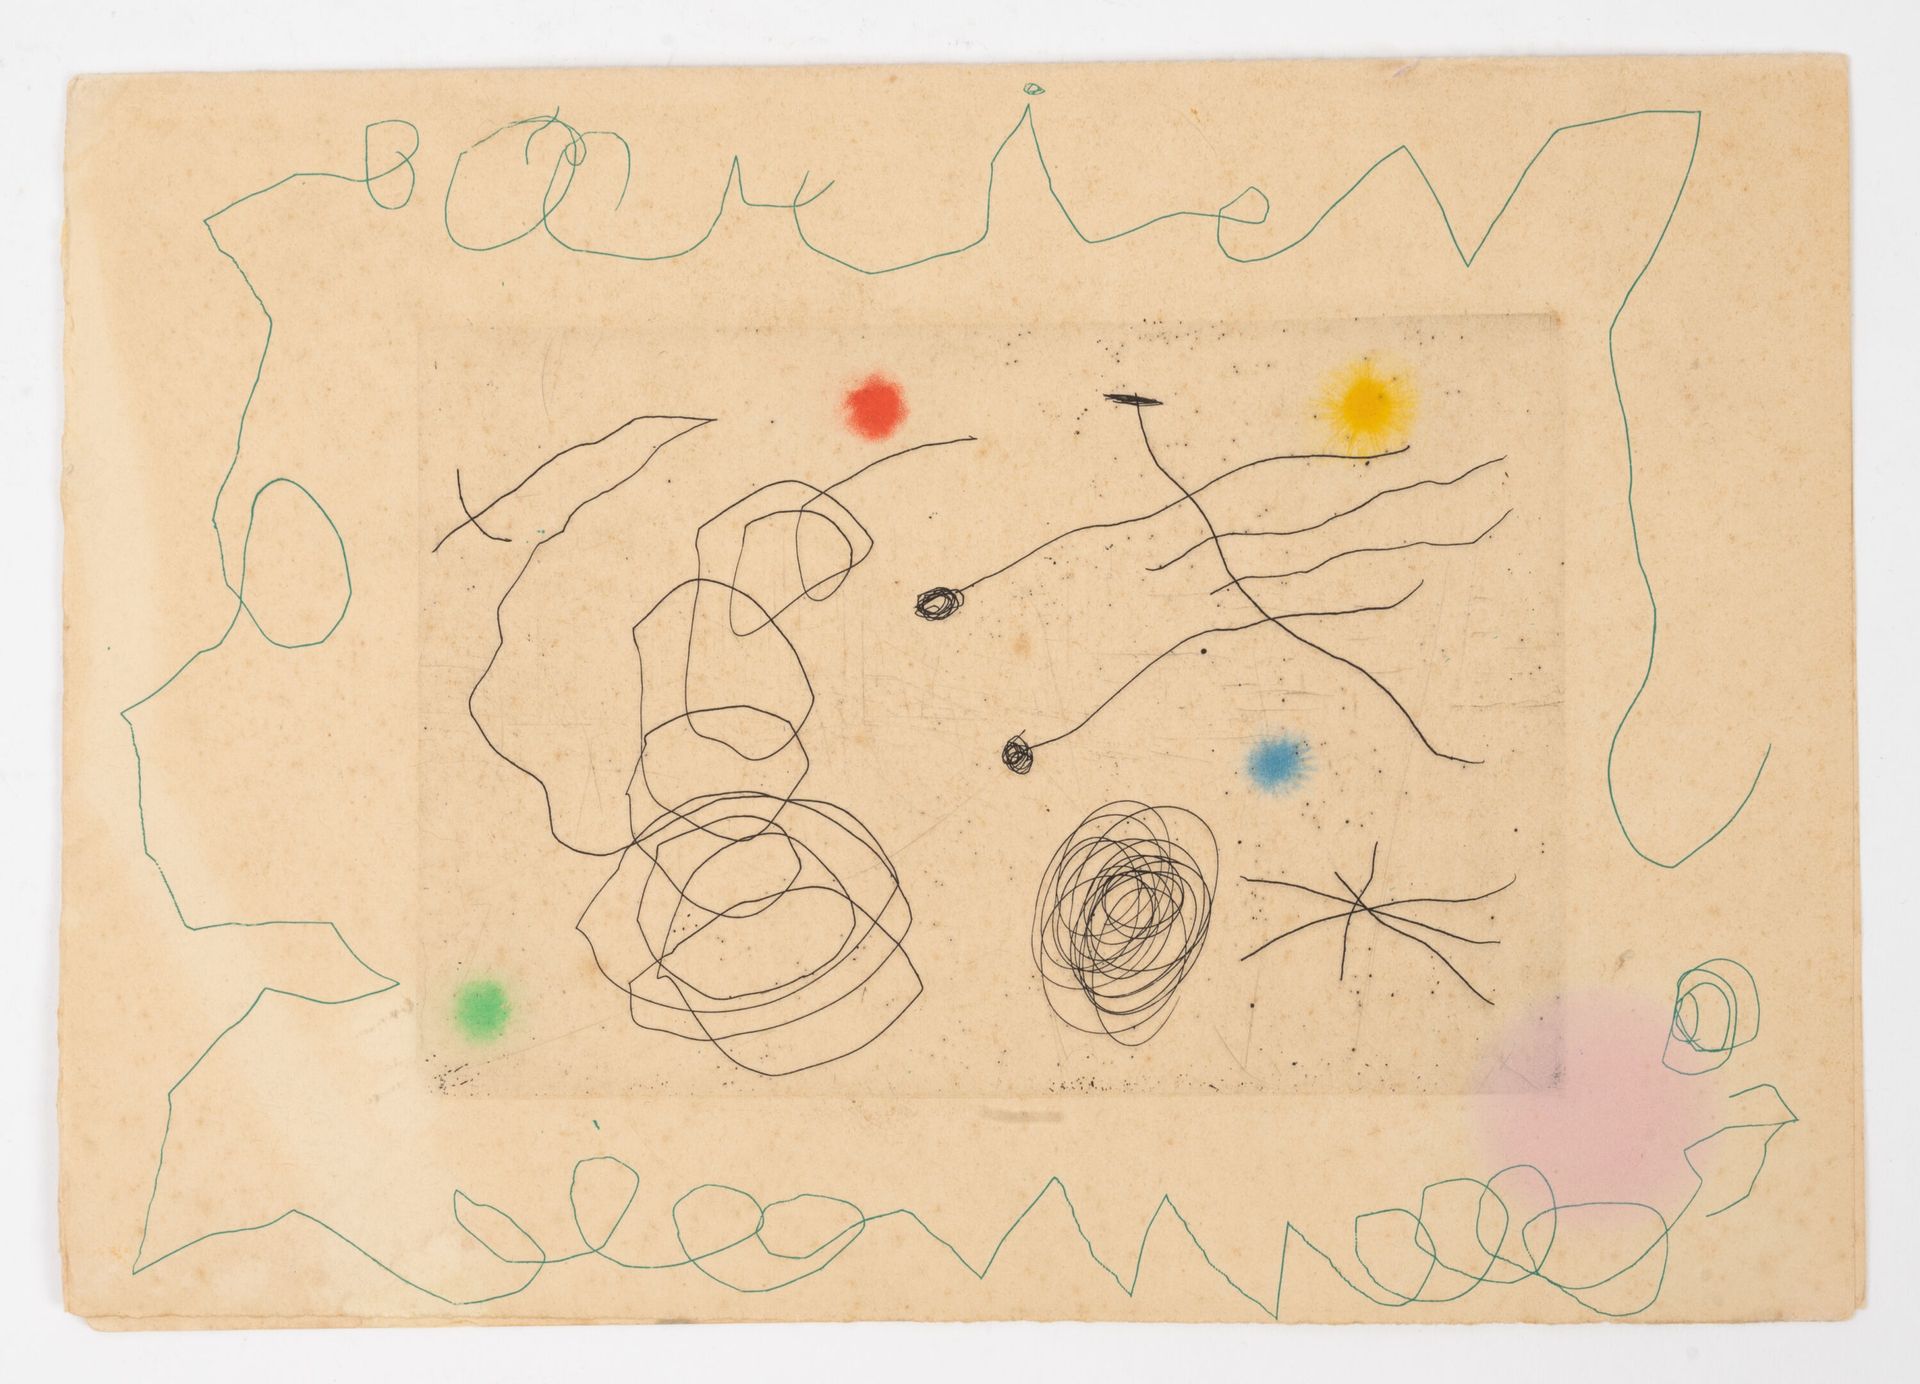 Joan MIRÓ (1893-1983) 猫头鹰和蜗牛。 
1964年给A.Maeght的贺卡。 
牛皮纸上的彩色蚀刻和水印，满纸。有些发黄，有零星的狐疑和一&hellip;